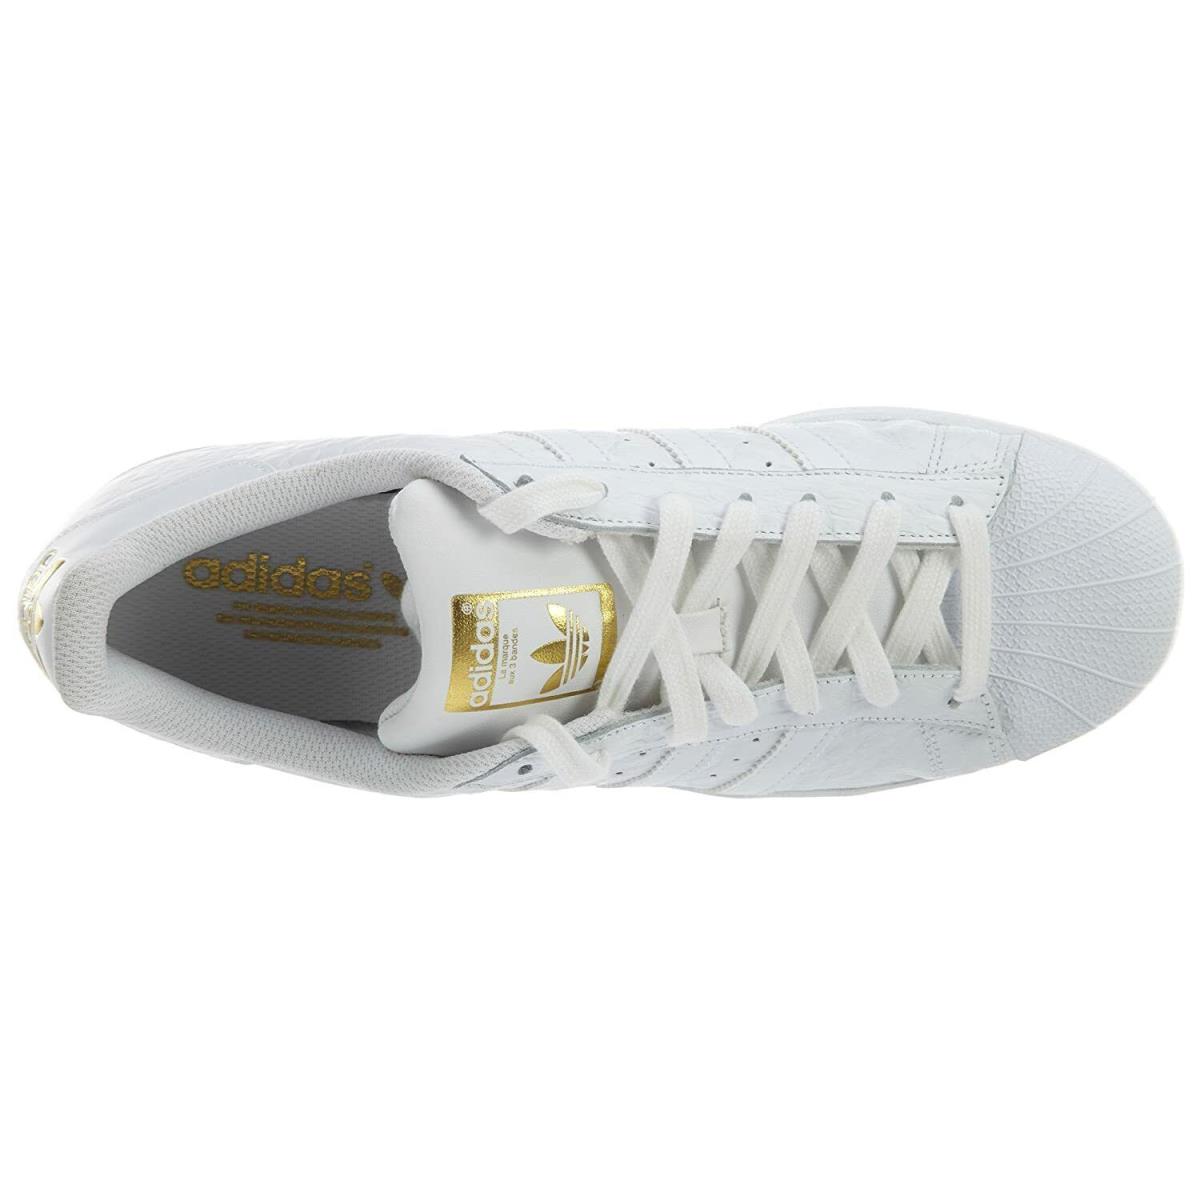 Adidas shoes Originals Superstar Croc - White 9